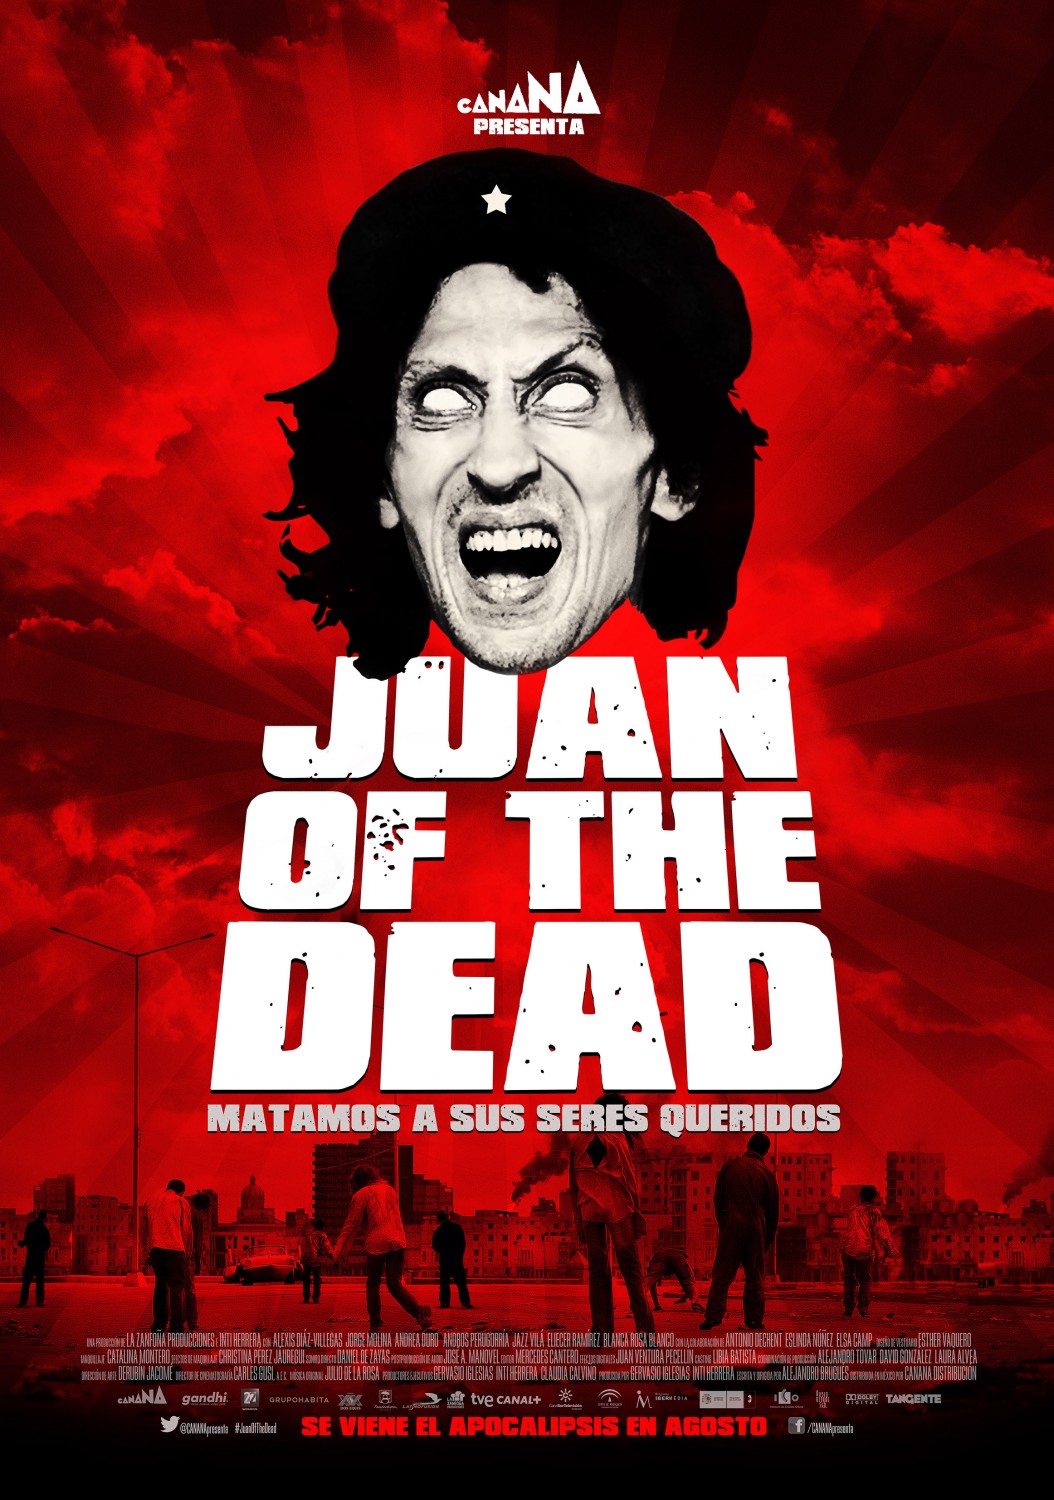 Extra Large Movie Poster Image for Juan de los Muertos (#4 of 6)